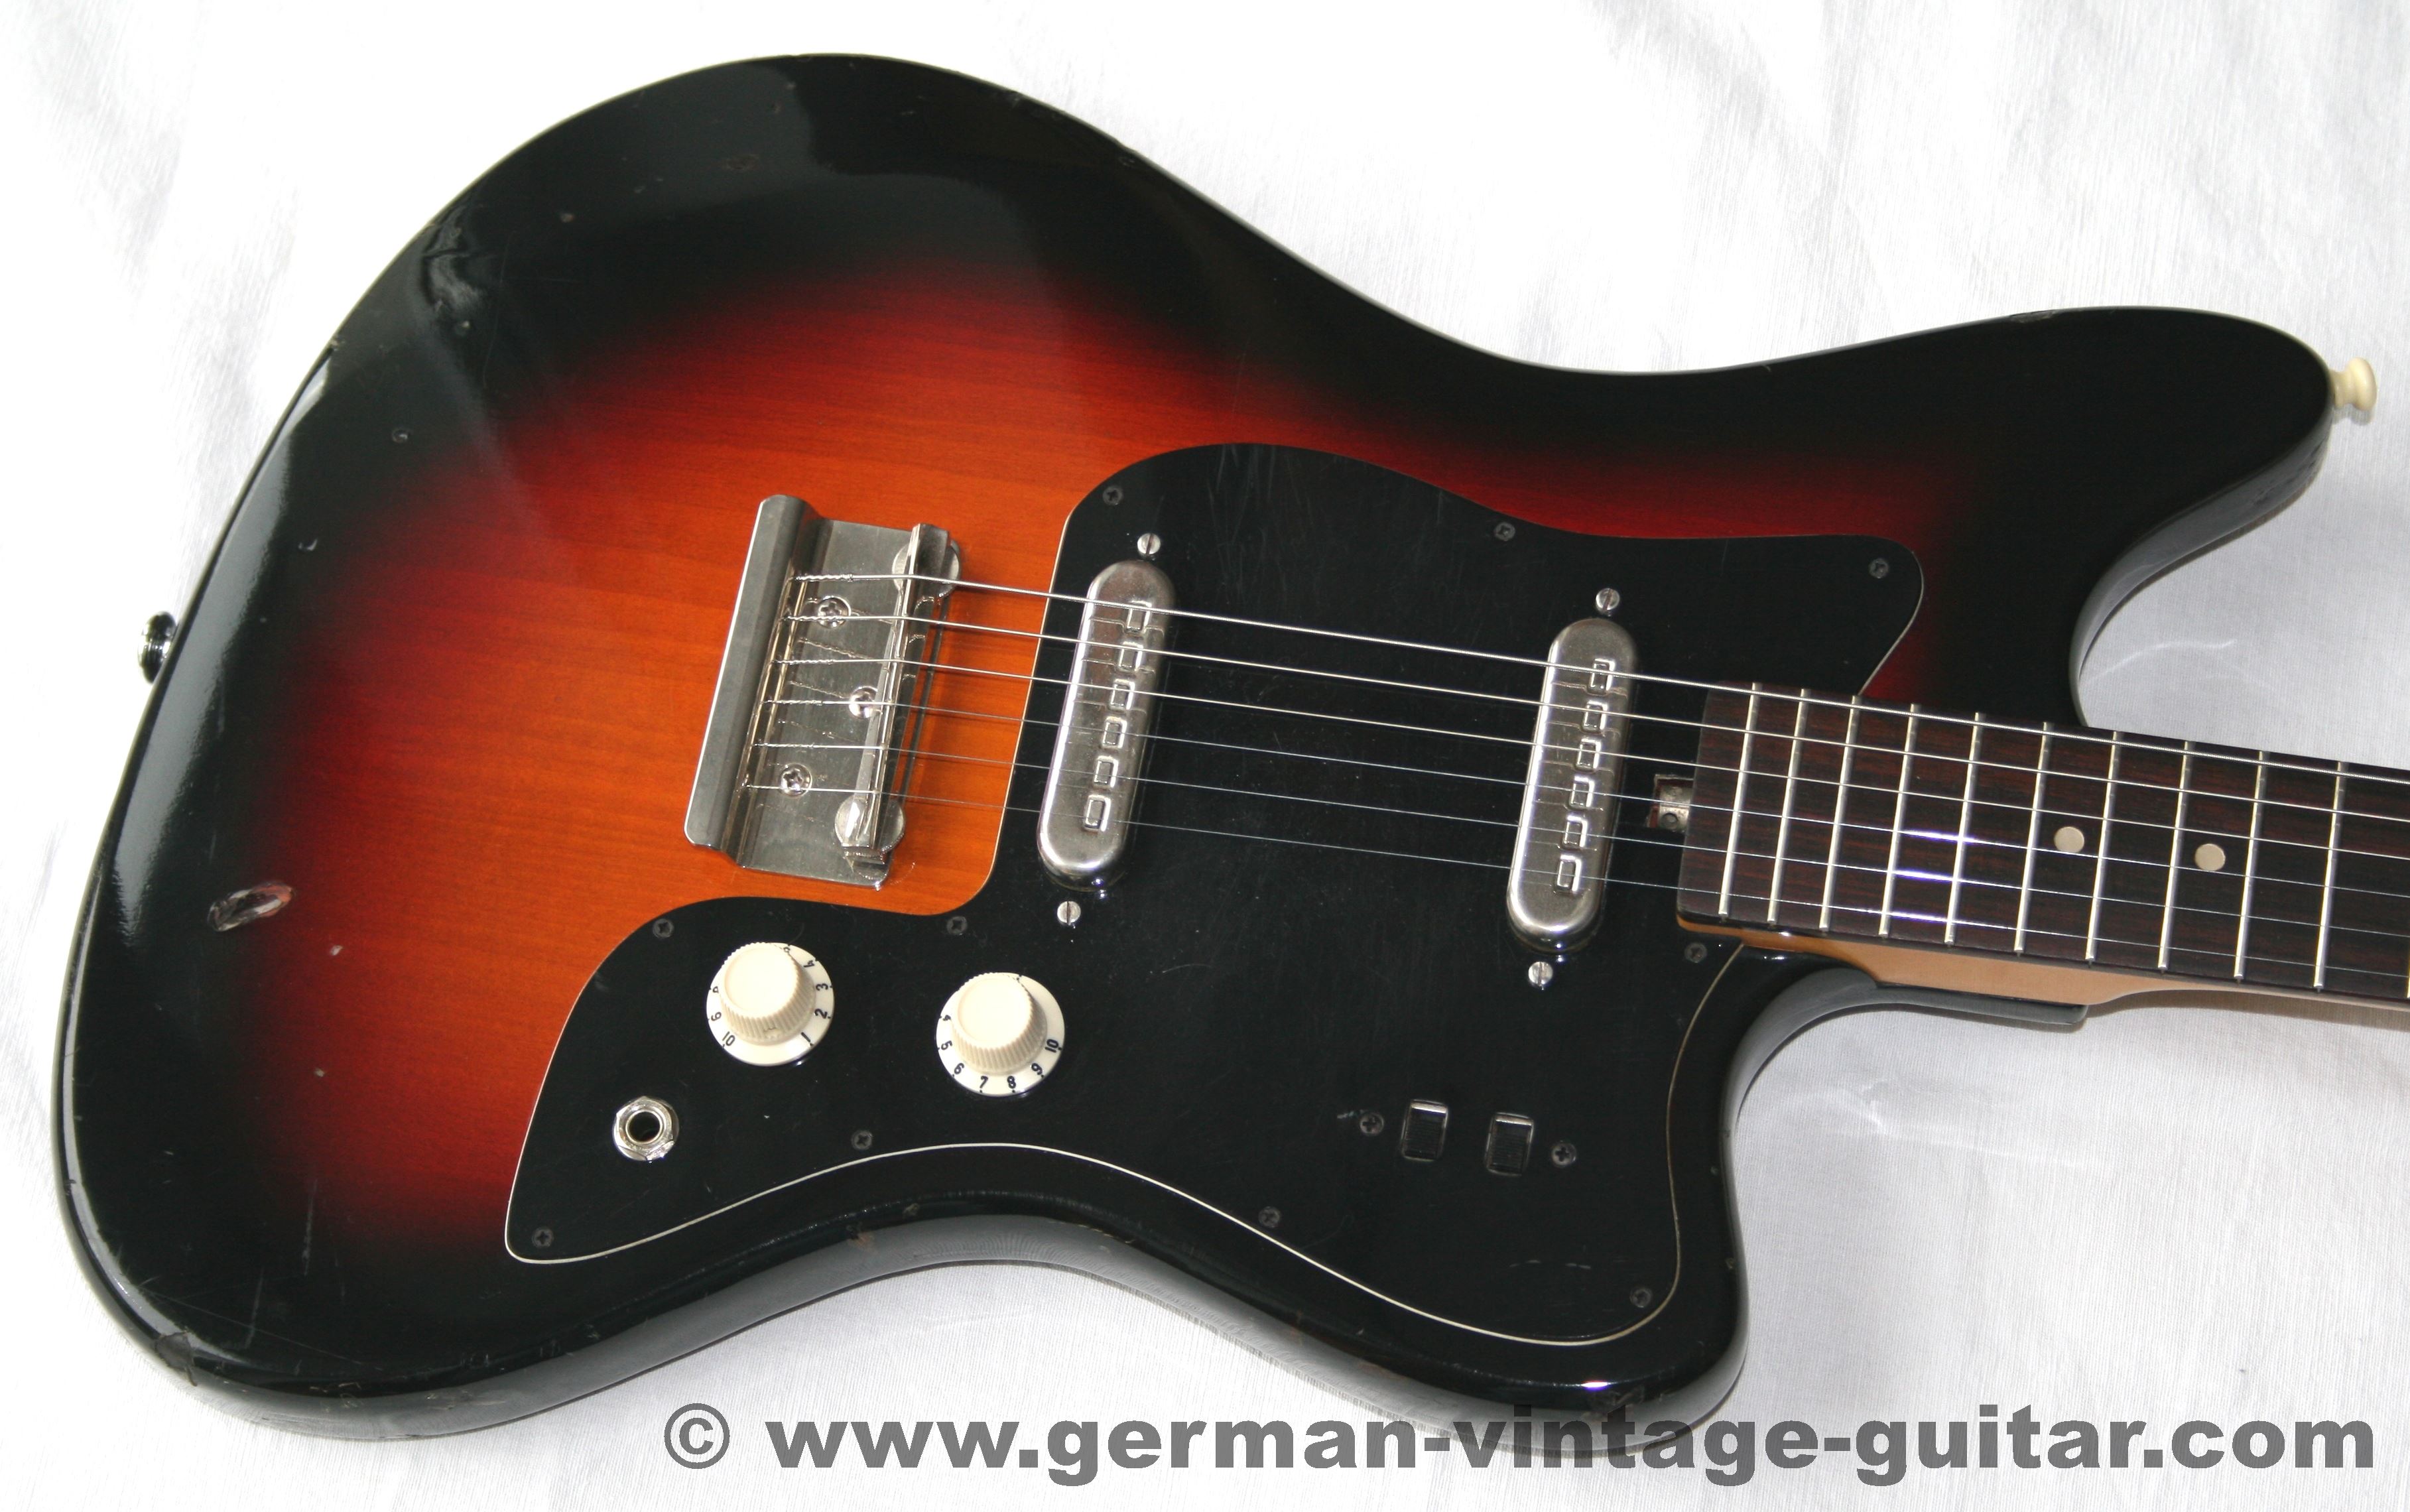 german-vintage-guitar.com